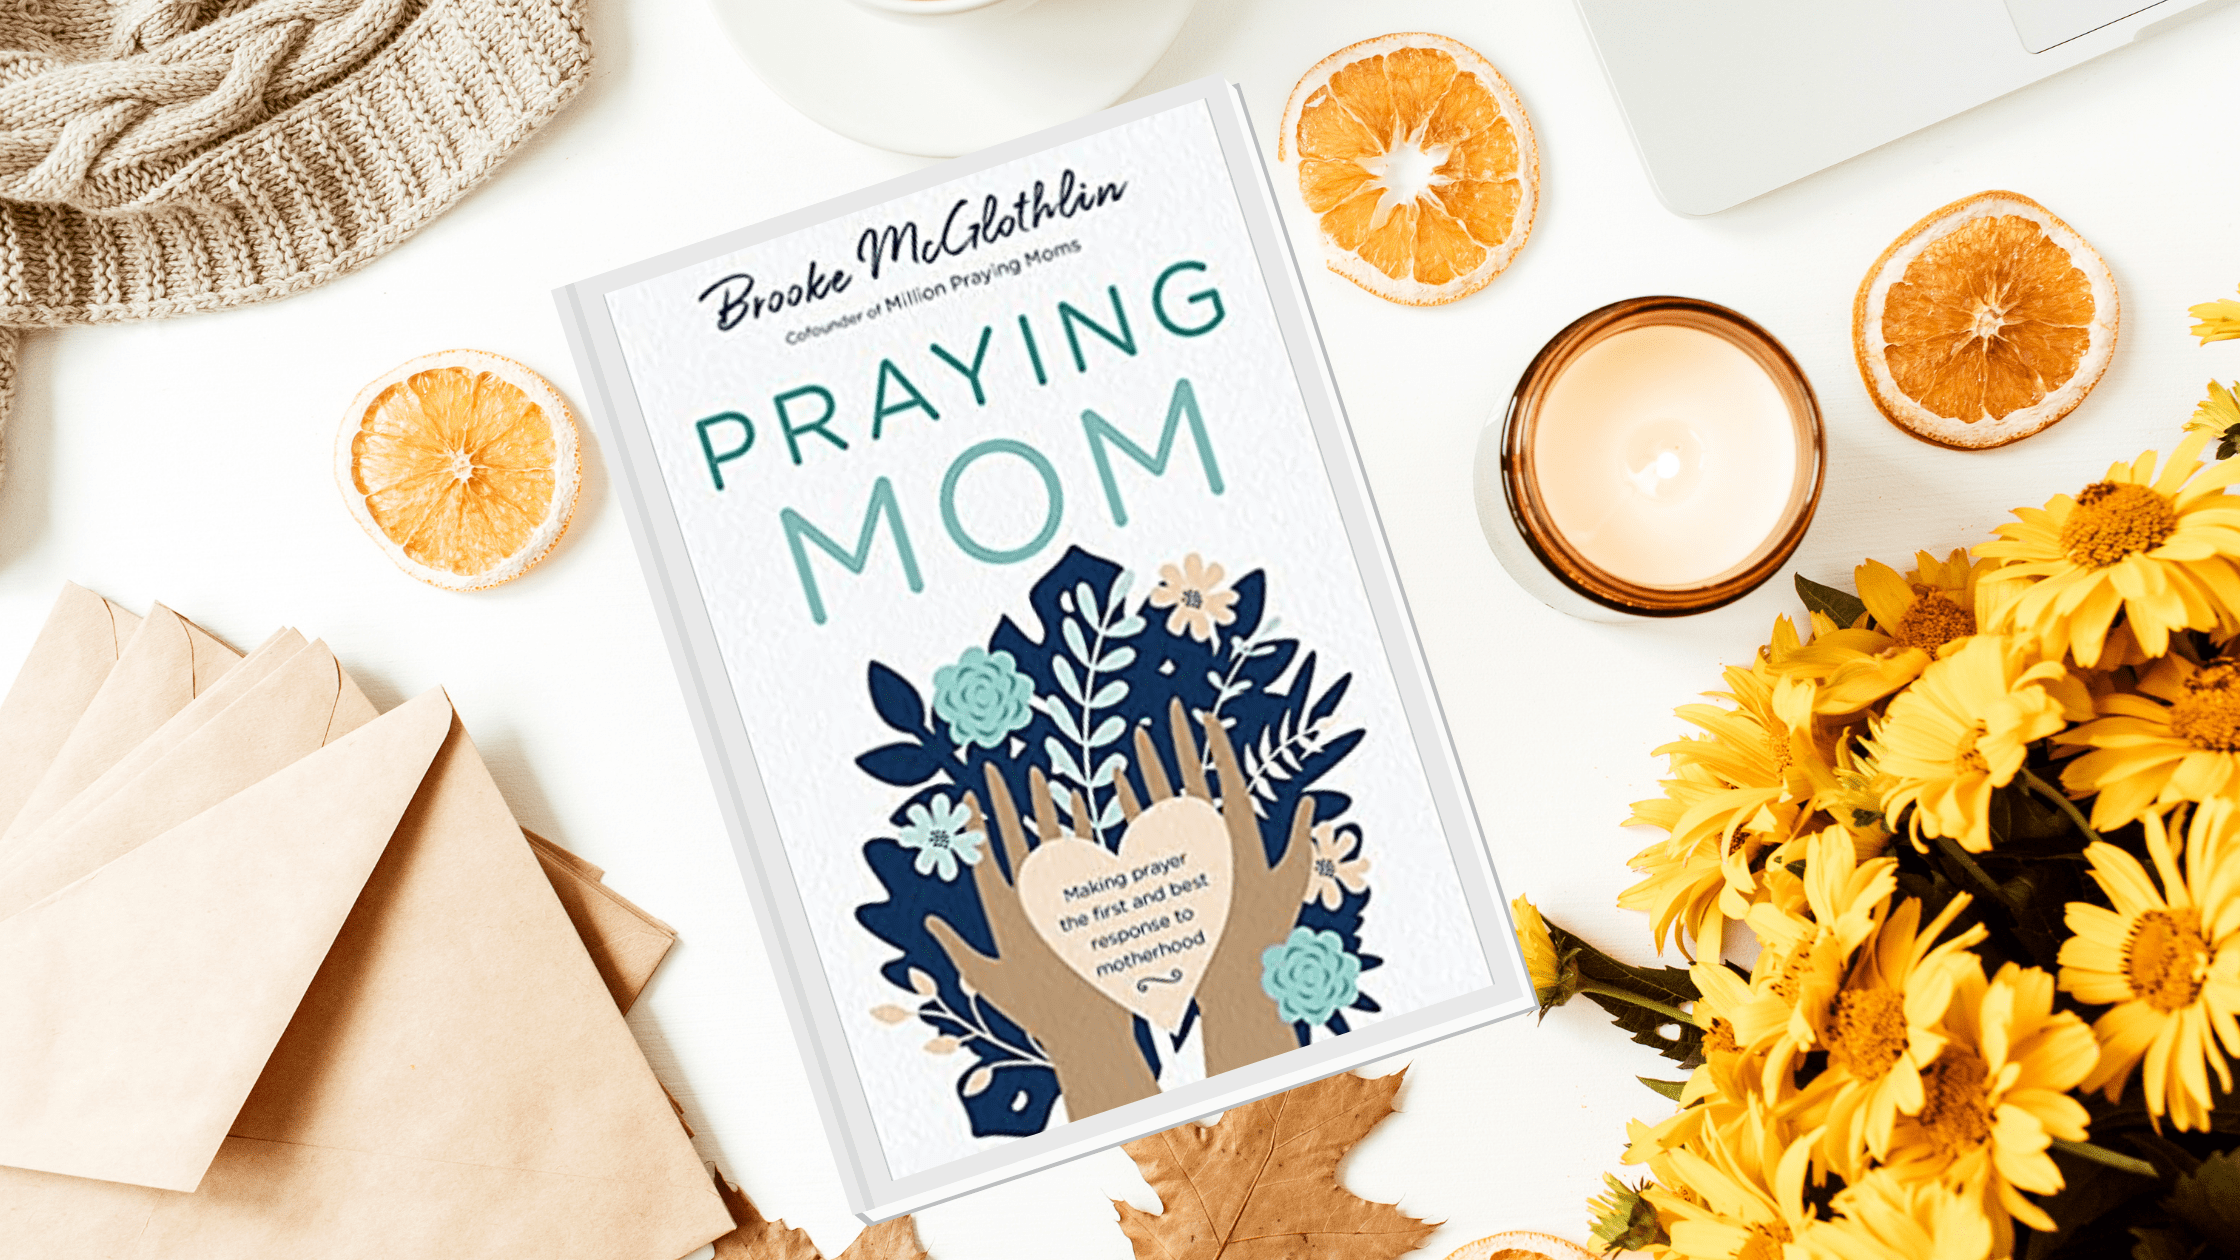 Book Review: Praying Mom by Brooke McGlothlin